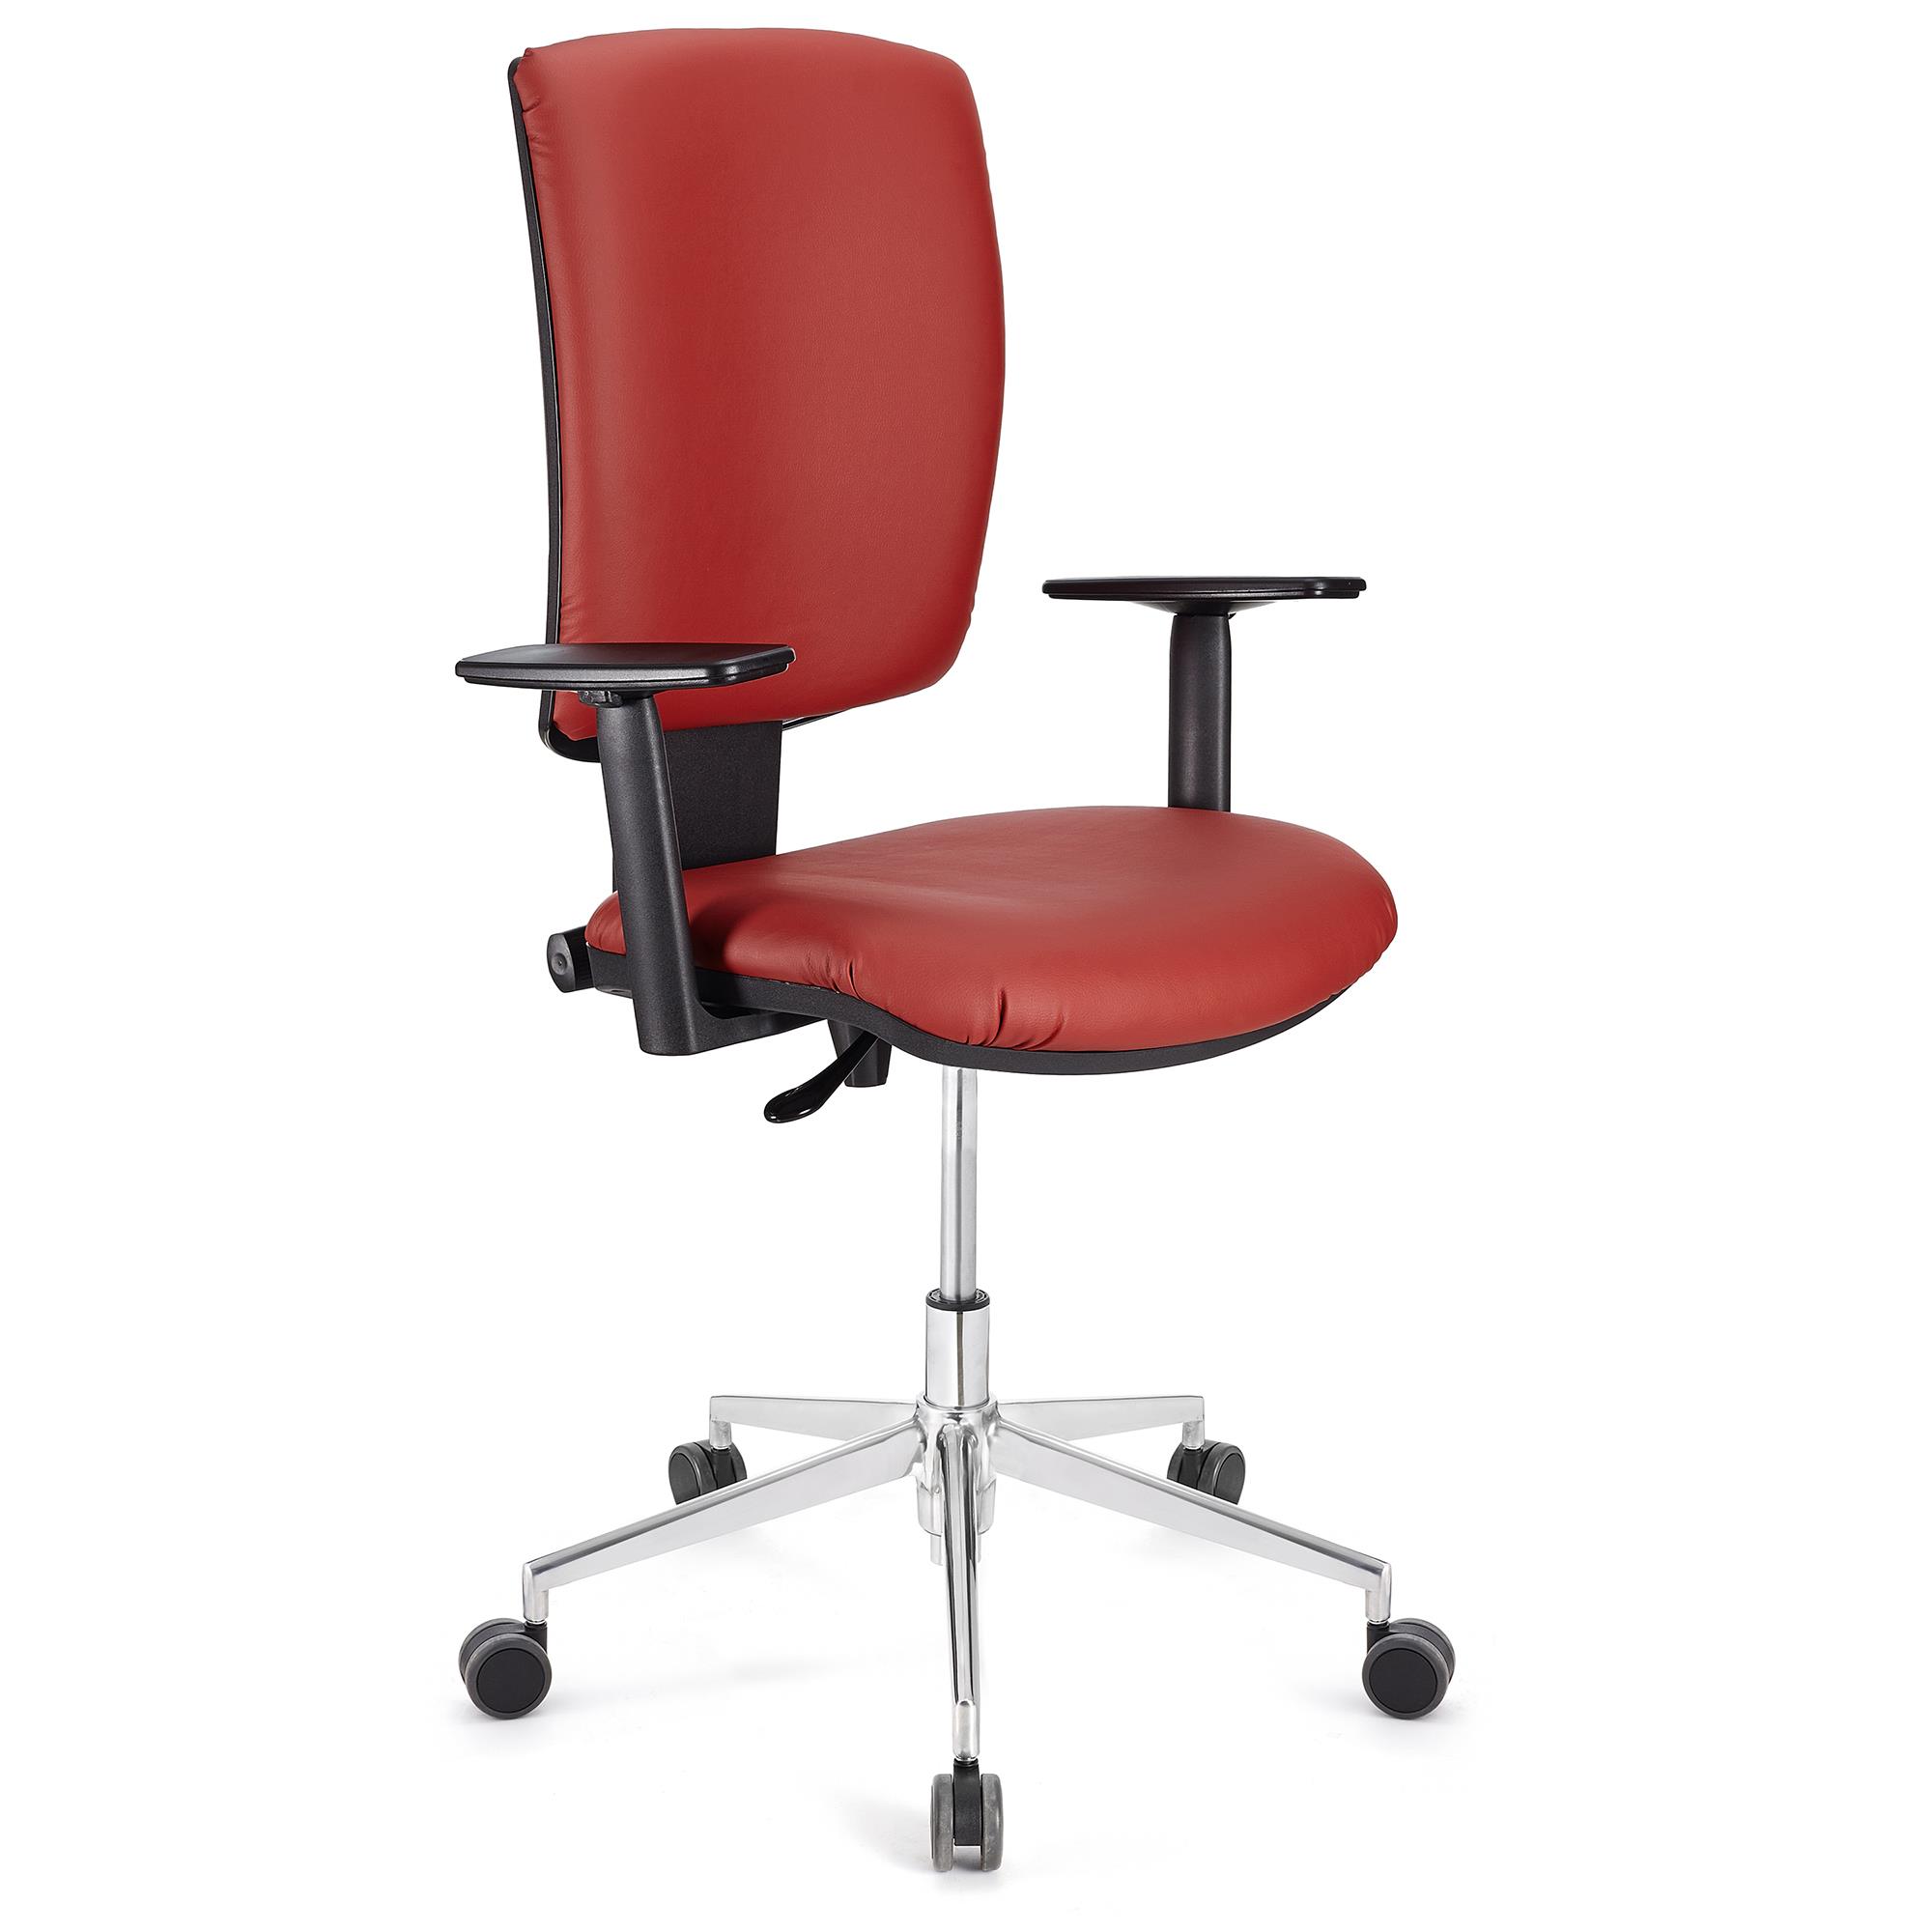 Bürostuhl ATLAS PRO LEDER, verstellbare Rücken- und Armlehnen, Metallfußkreuz, Farbe Rot